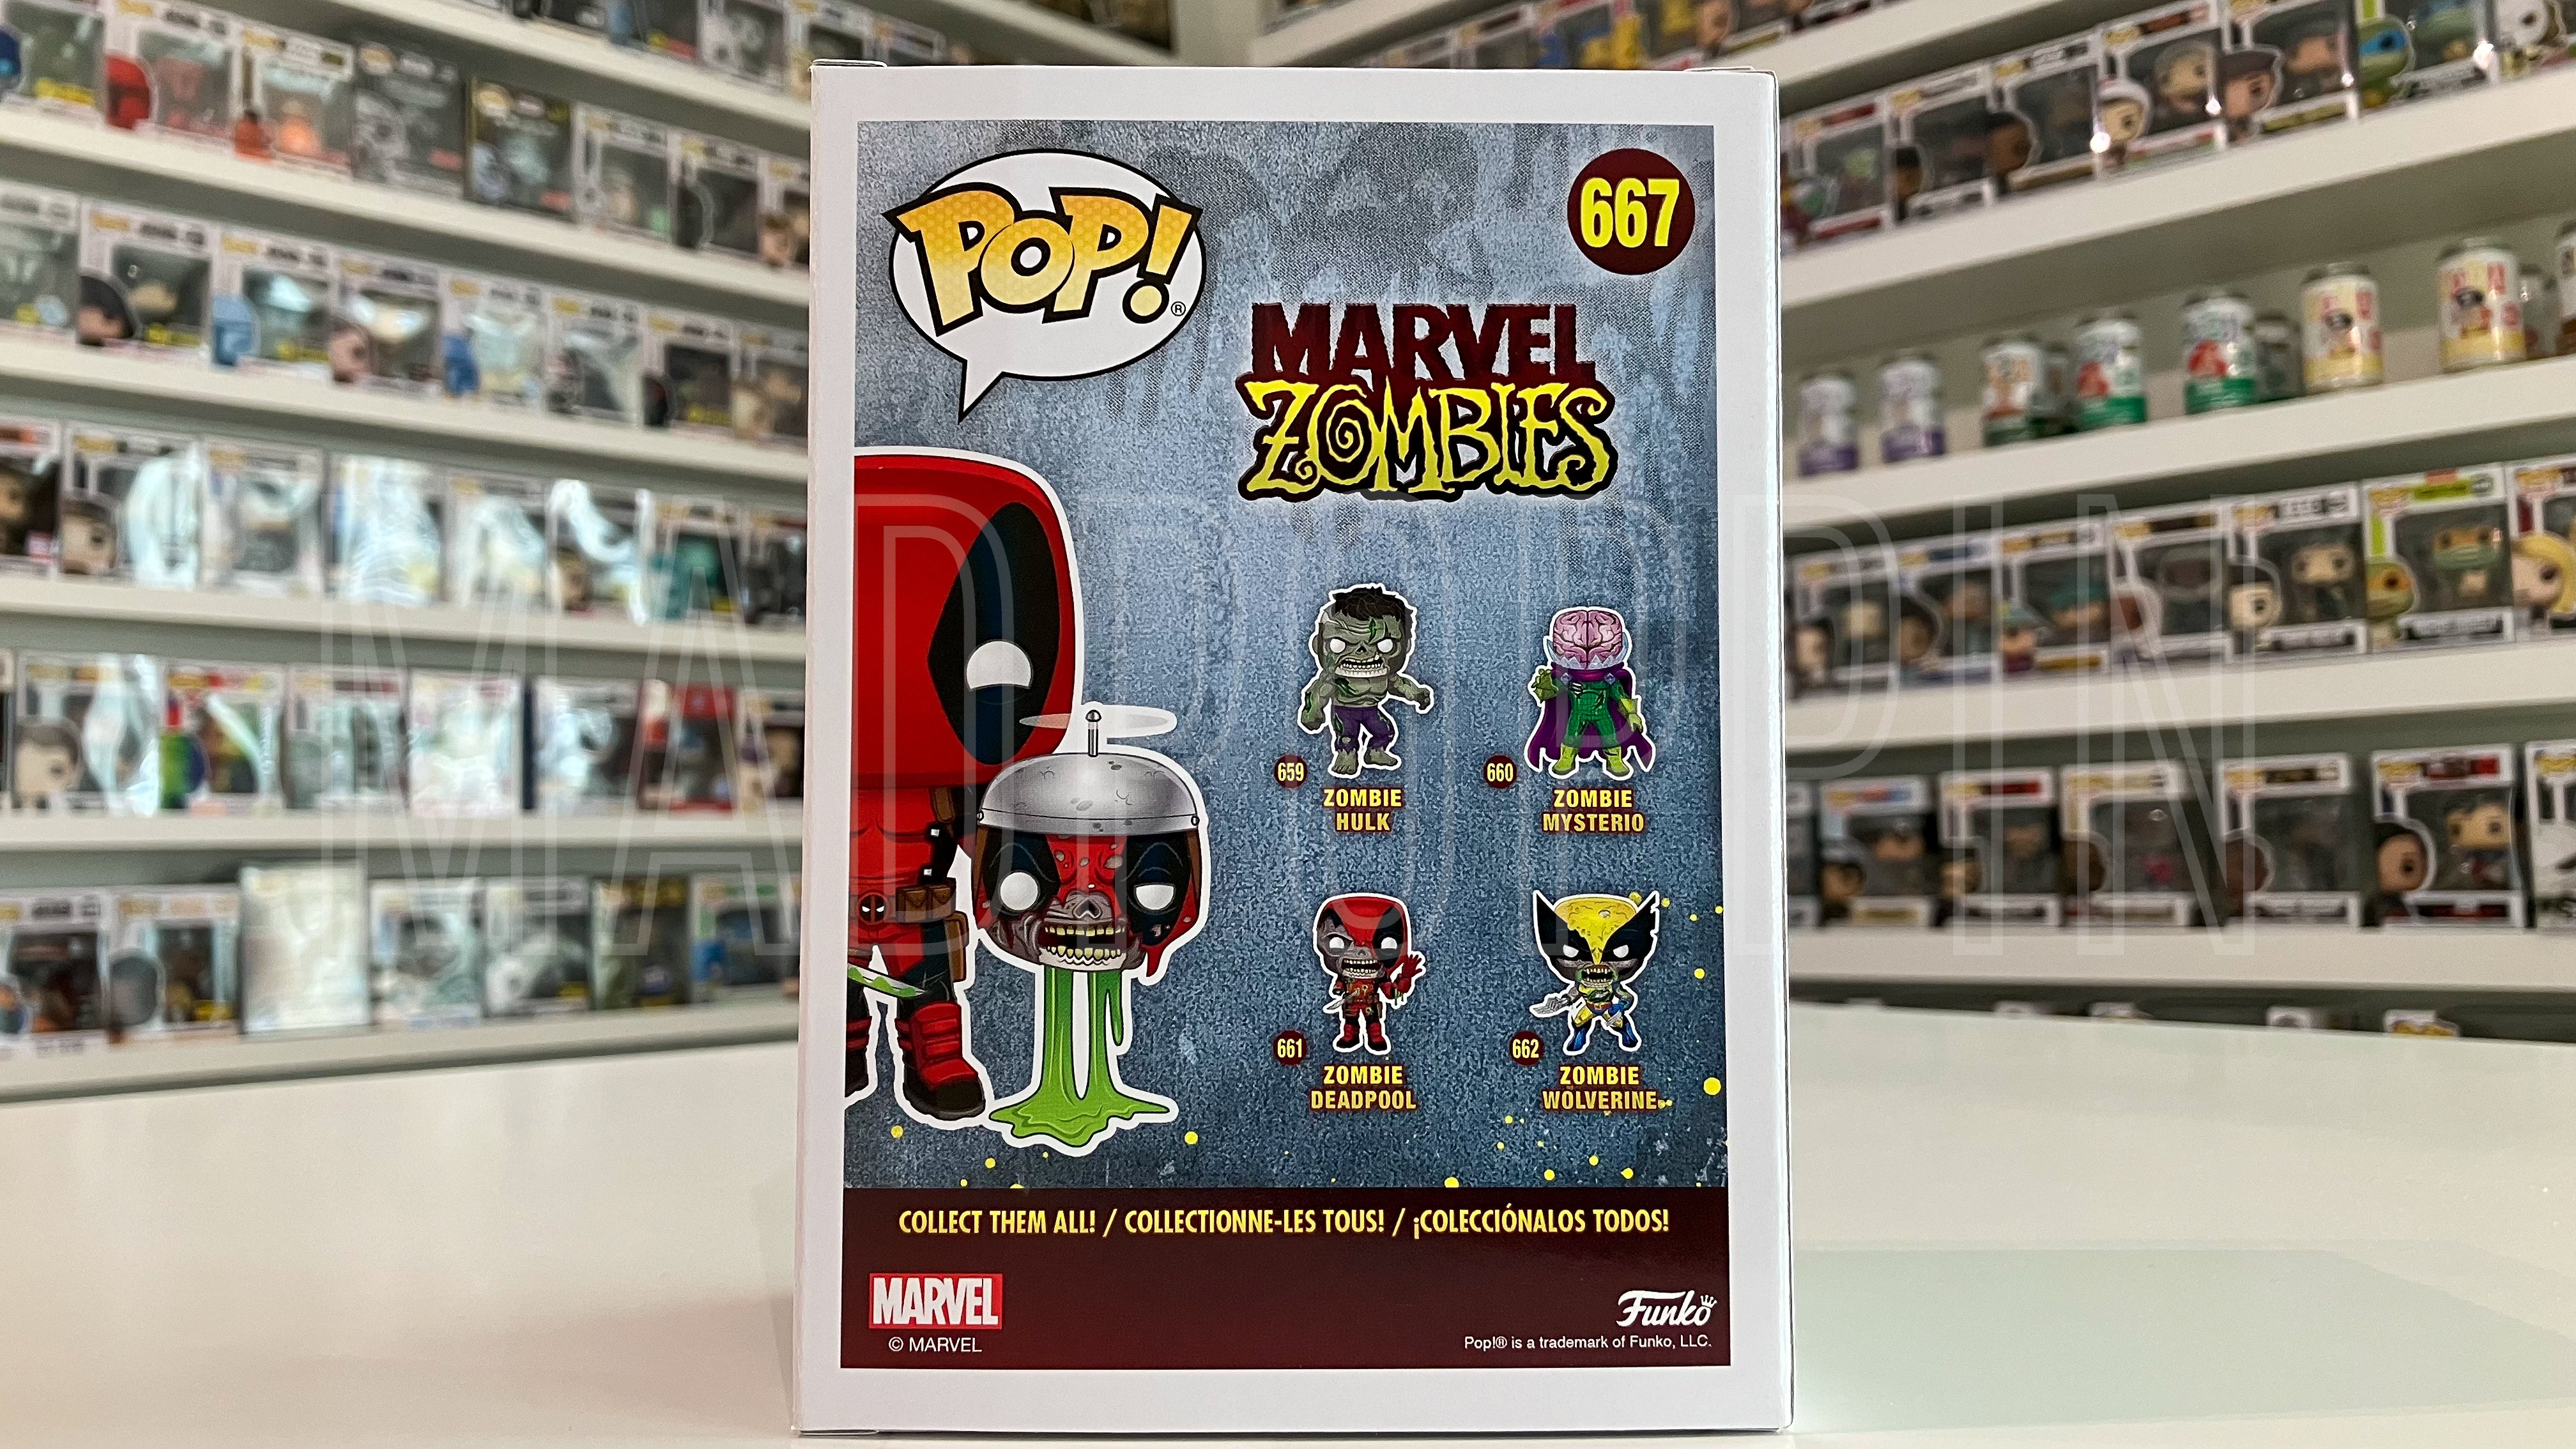 Funk Pop Marvel Zombies Collector Corps Exclusive Deadpool w/ Headpool 667